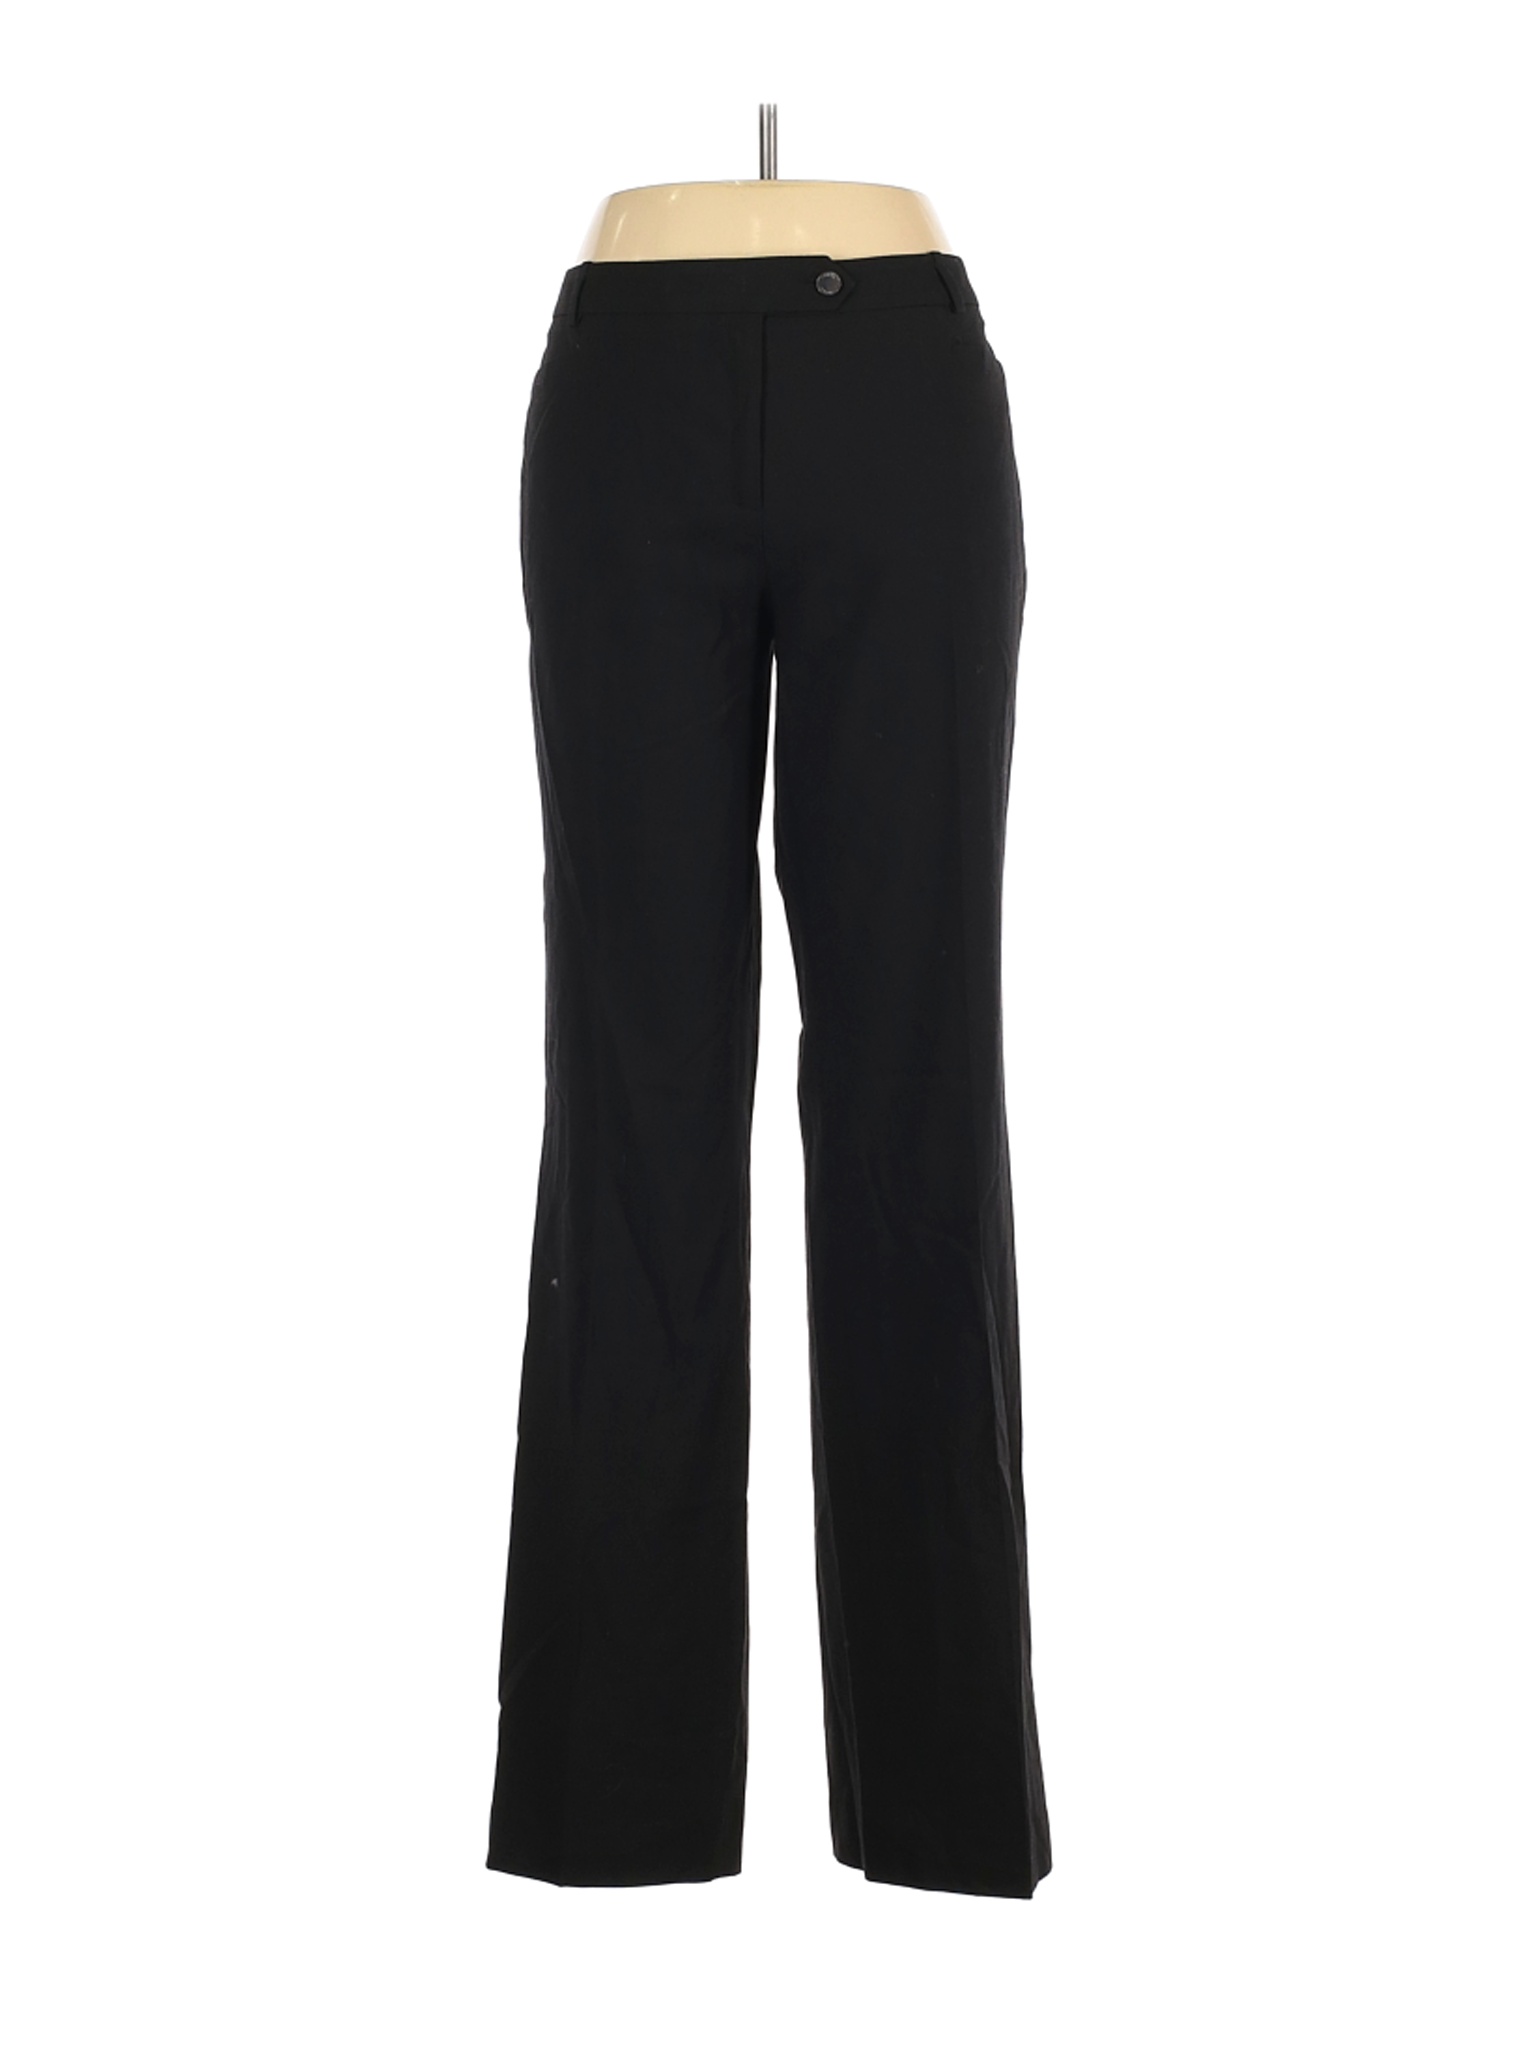 Calvin Klein Women Black Dress Pants 10 Tall | eBay